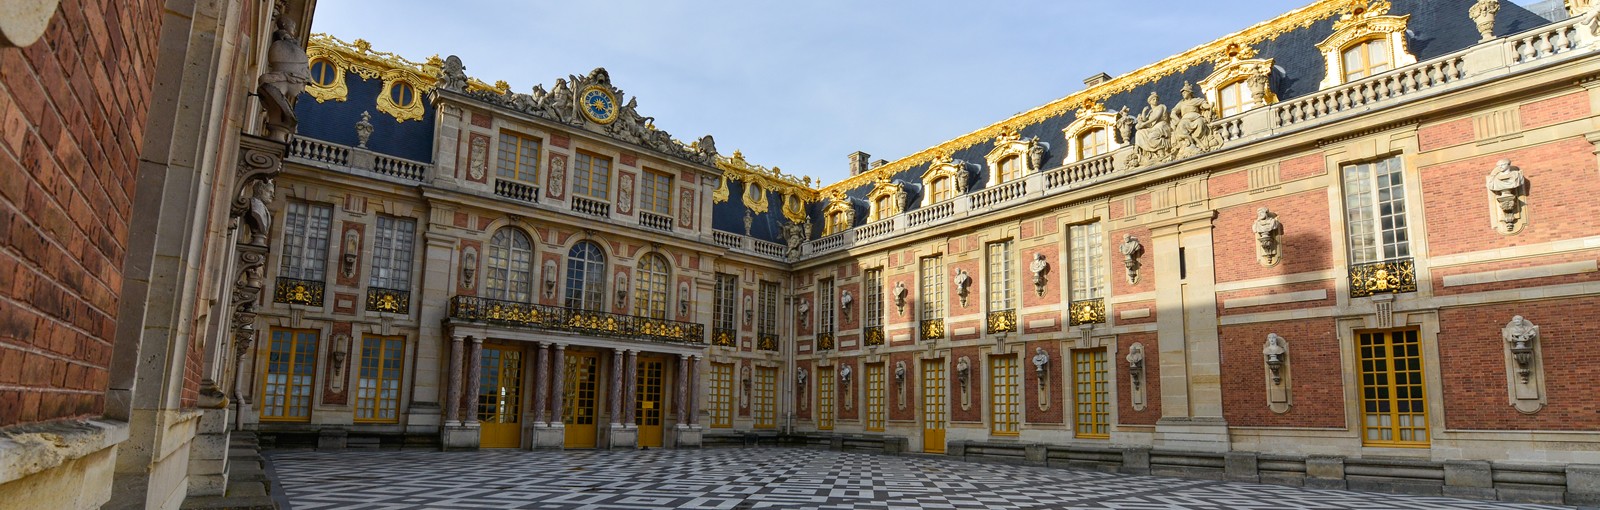 Tours 巴黎和凡尔赛宫一日游 - 巴黎市区游 - 巴黎游